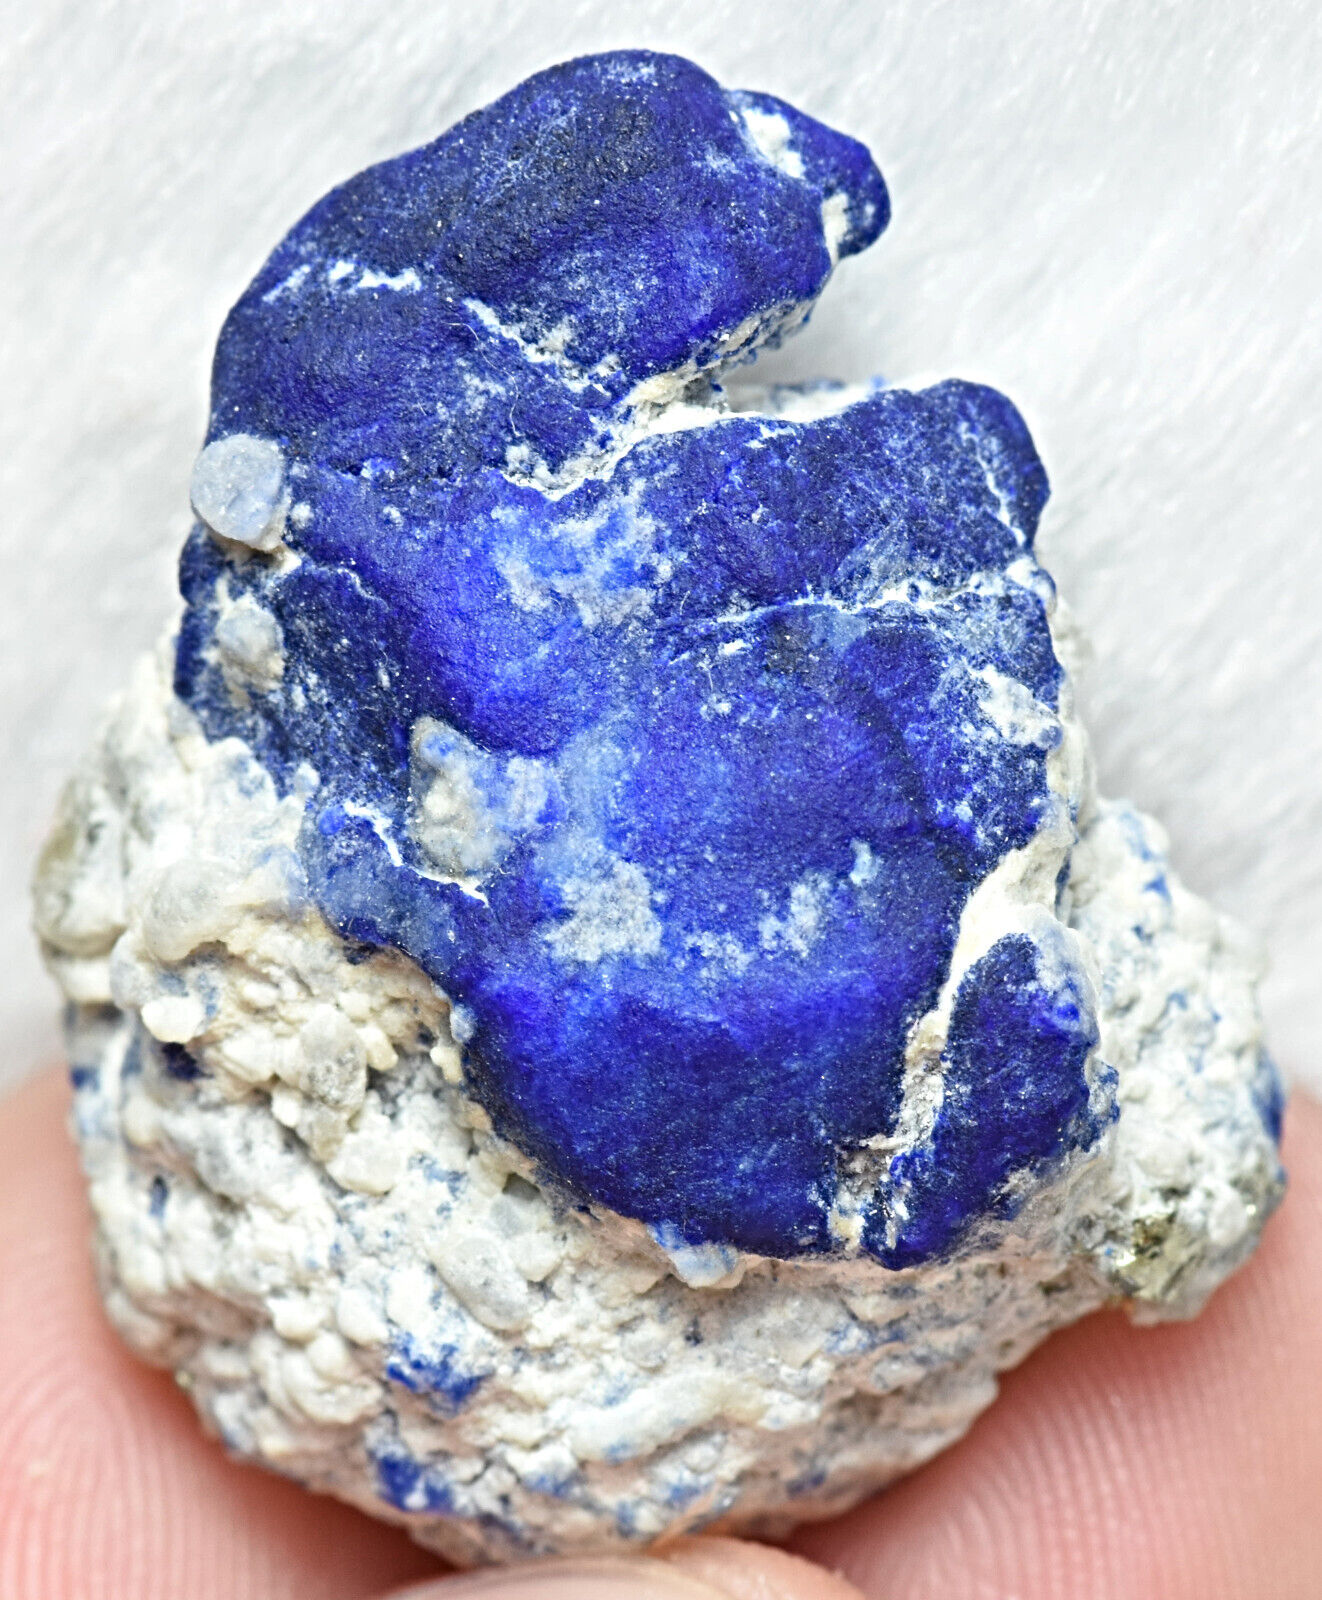 44 Carat Unique Lazurite Crystal Specimen From Badakshan Afghanistan